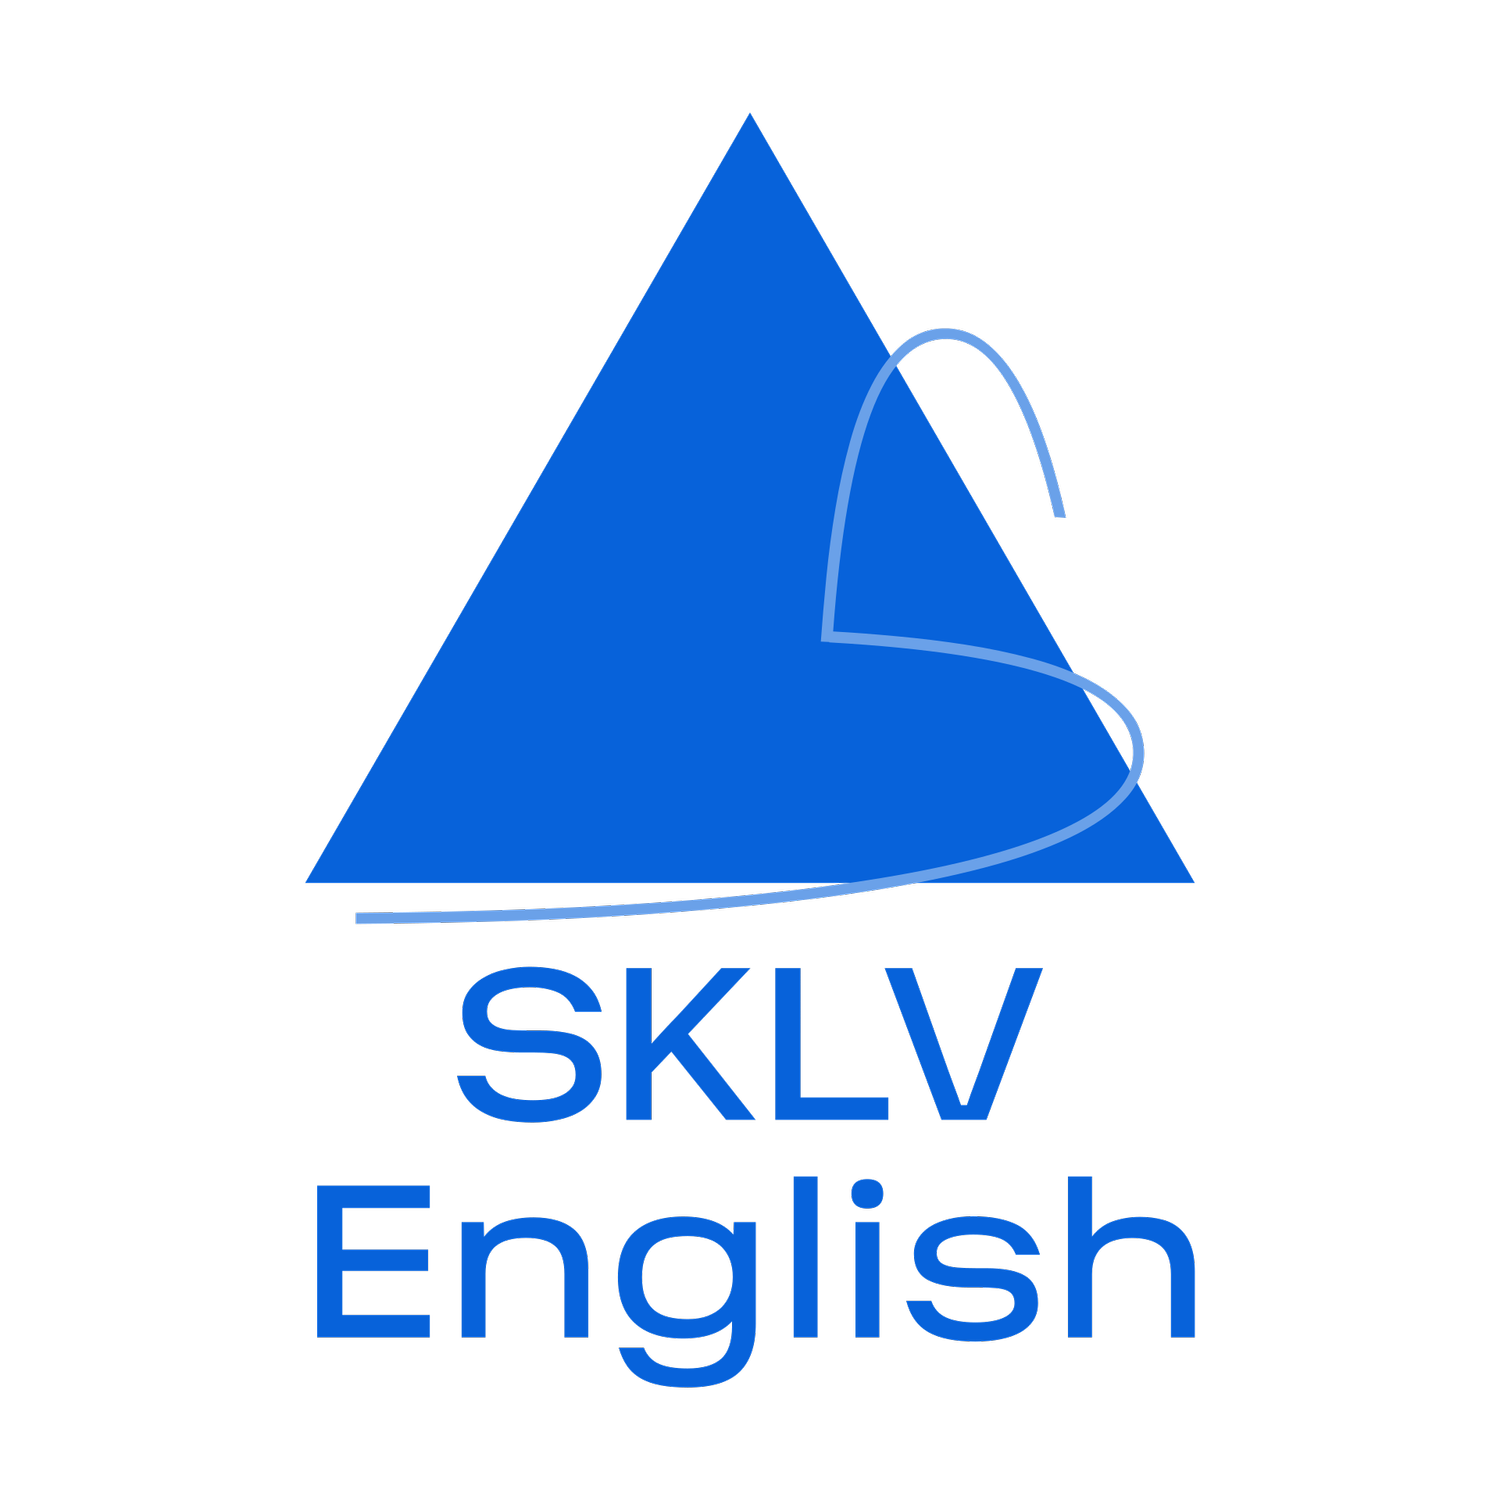 SKLV English